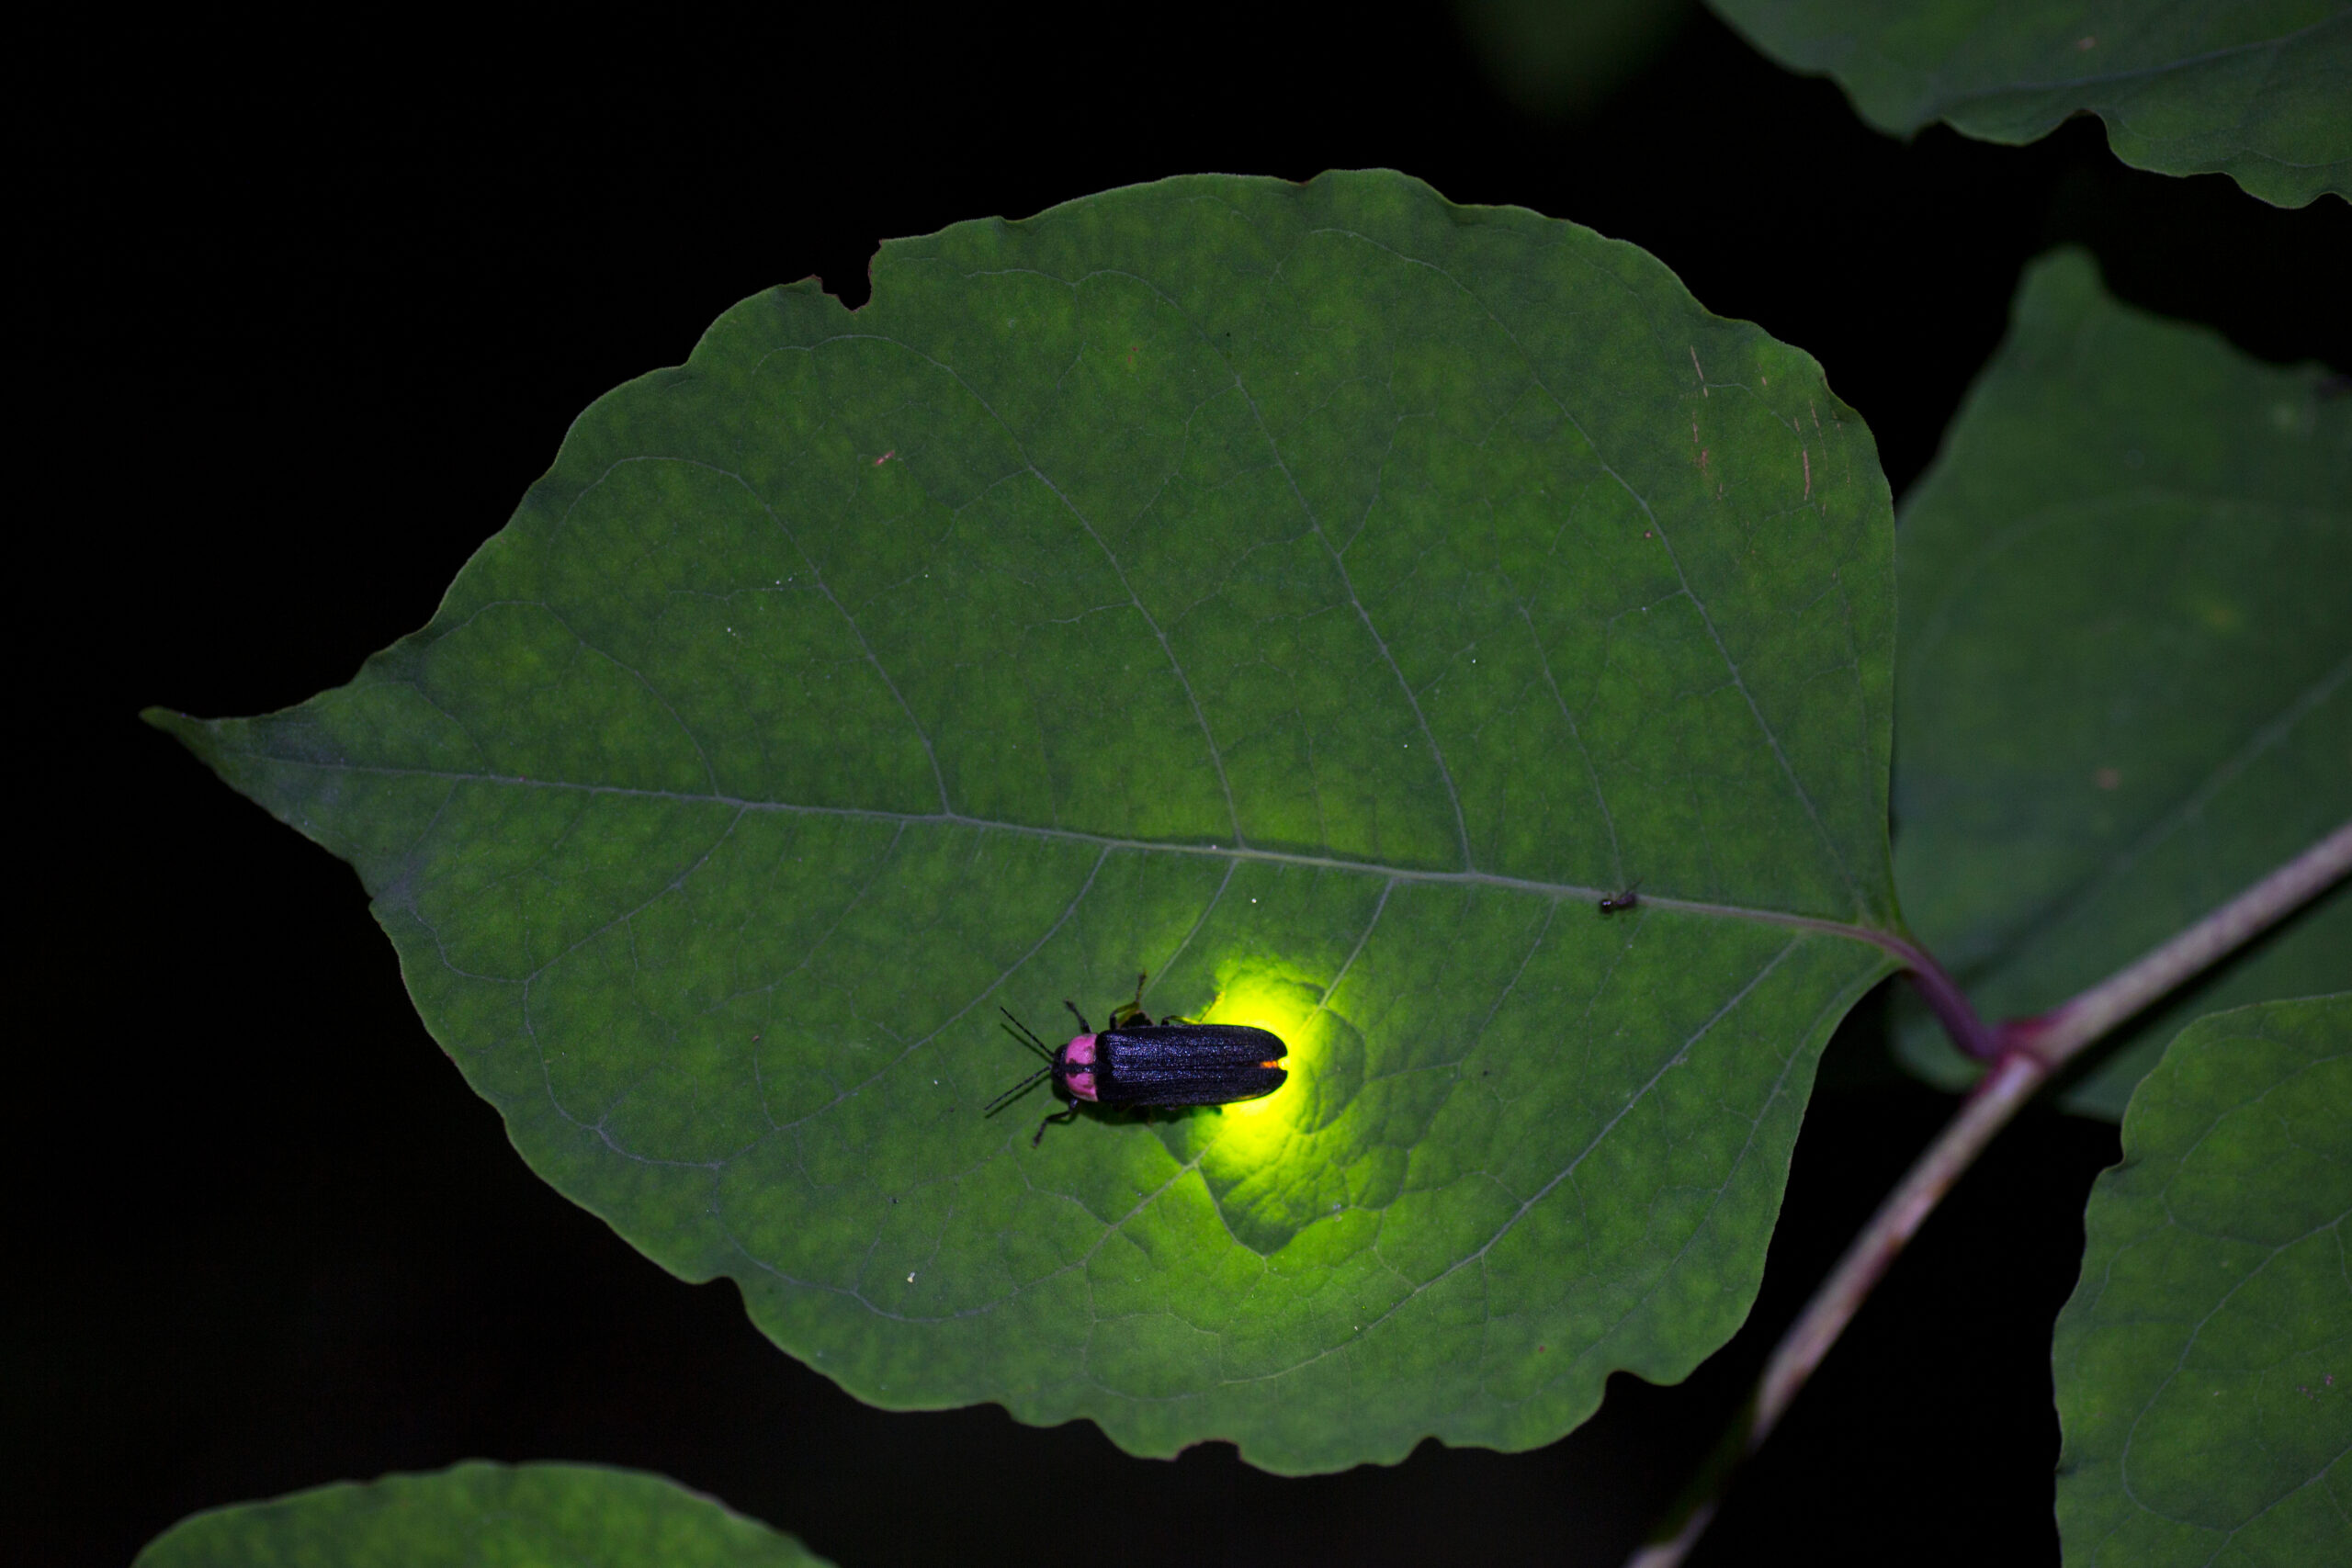 Firefly on a green leaf